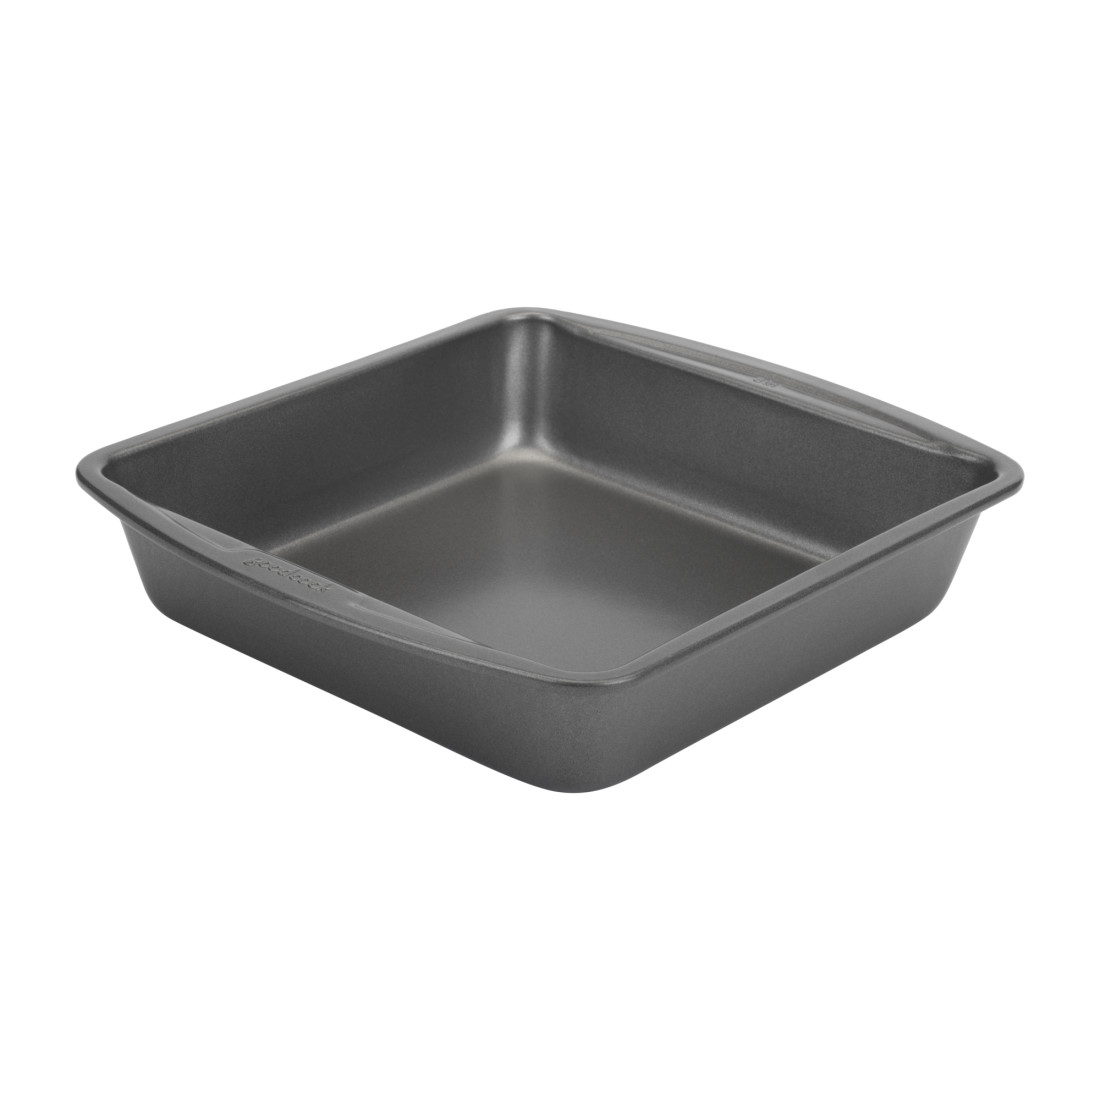 Yesbay 8 inch Large Capacity Food Grade Reusable Roasting Pan Square Deep Baking Pan Household Supplies, Black